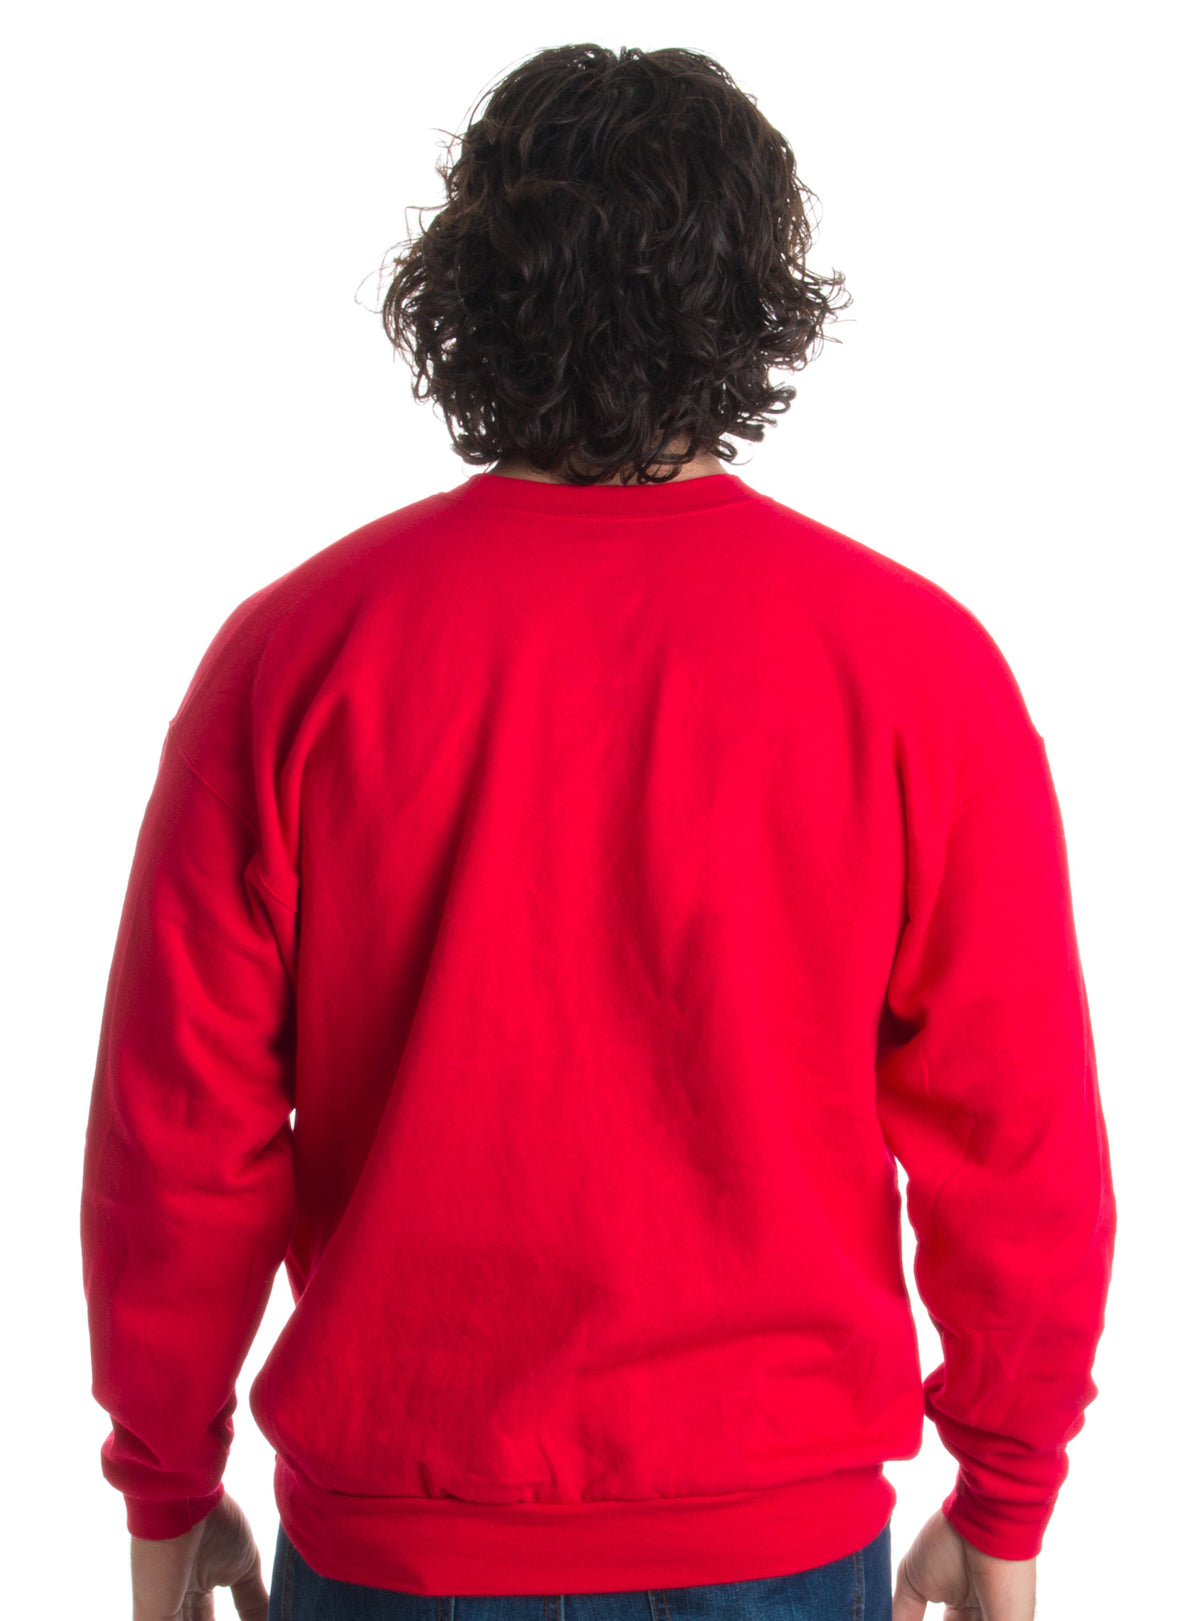 Ann Arbor T-shirt Co. Santa Claus Costume - Novelty Christmas Sweater Holiday Crewneck Sweatshirt - Men's/Unisex